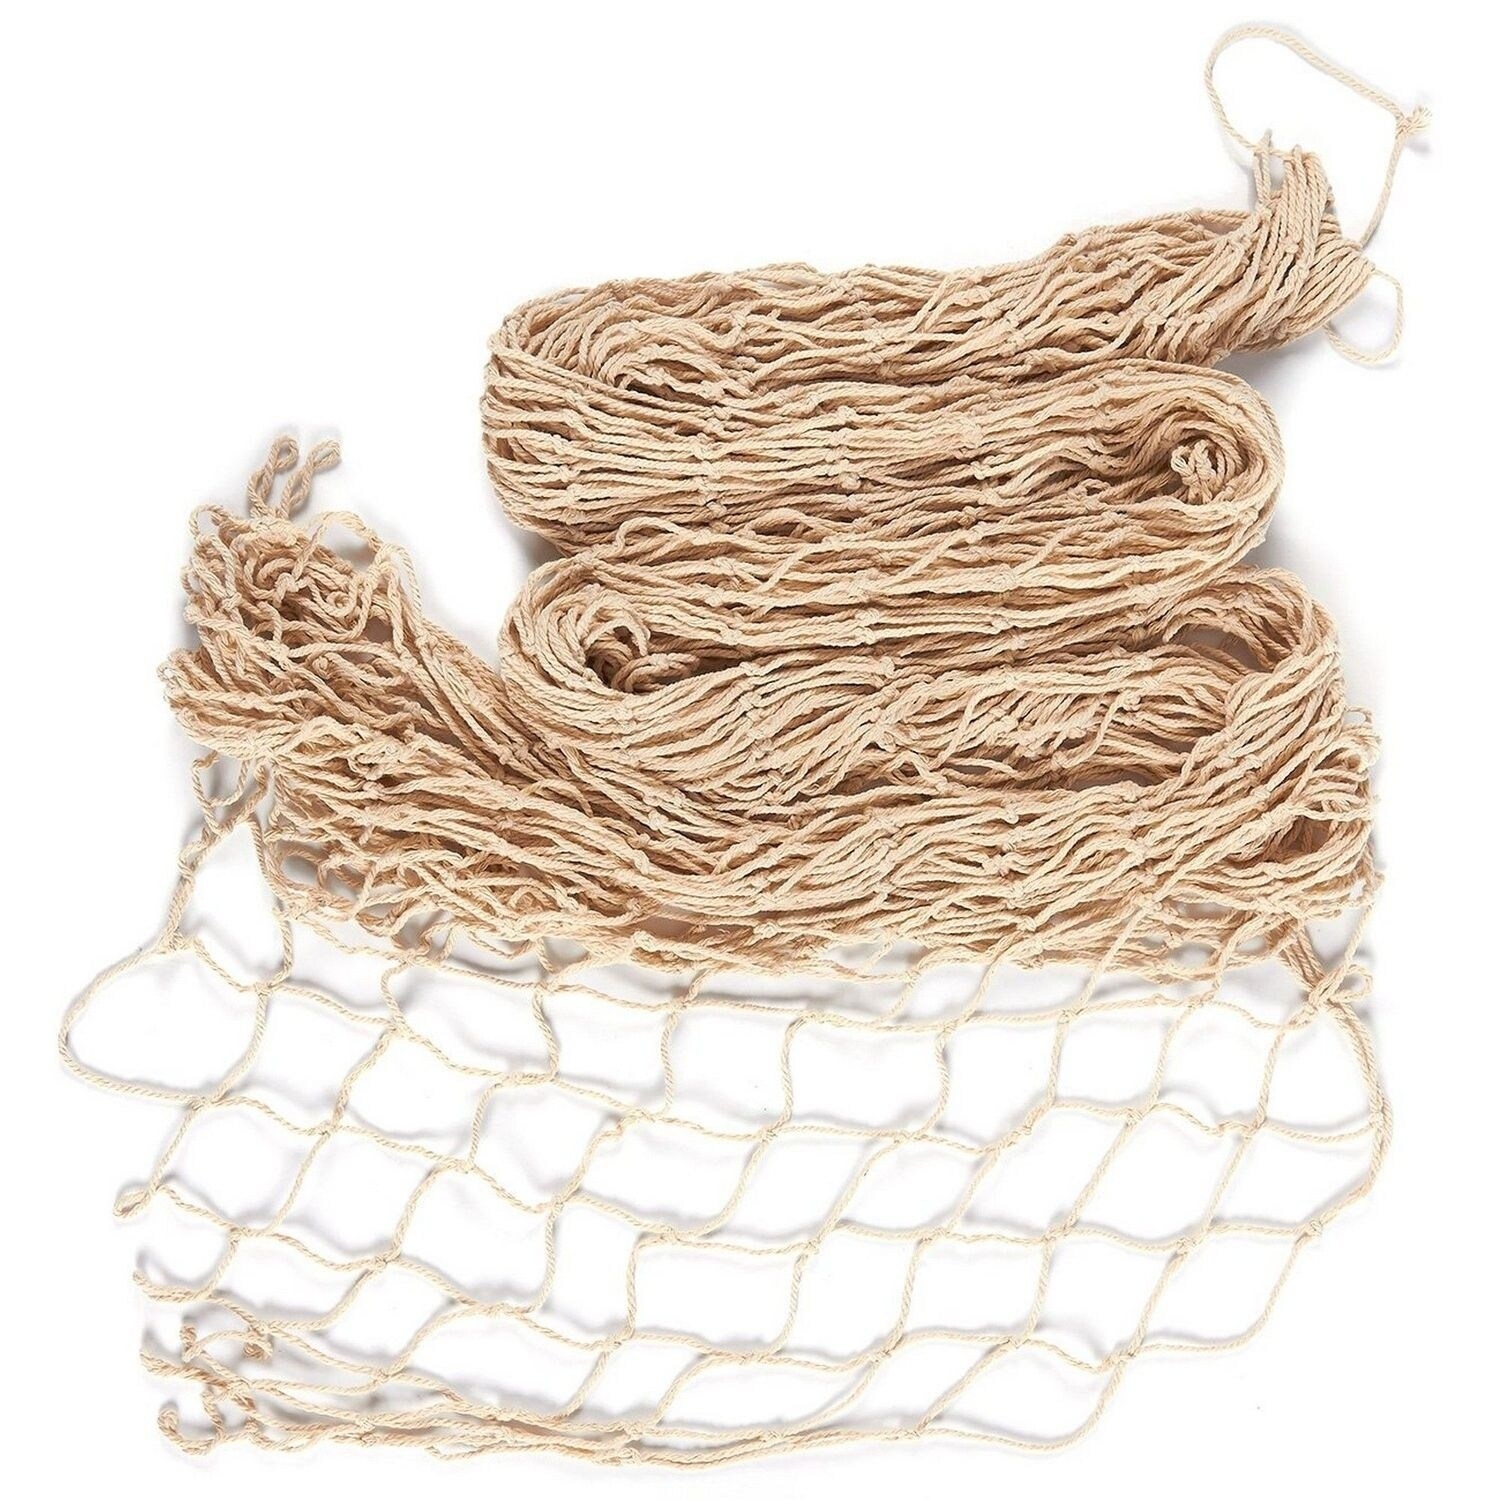 Buy ZERHOK Decor Fishing Net,Beige Natural Cotton Decorative